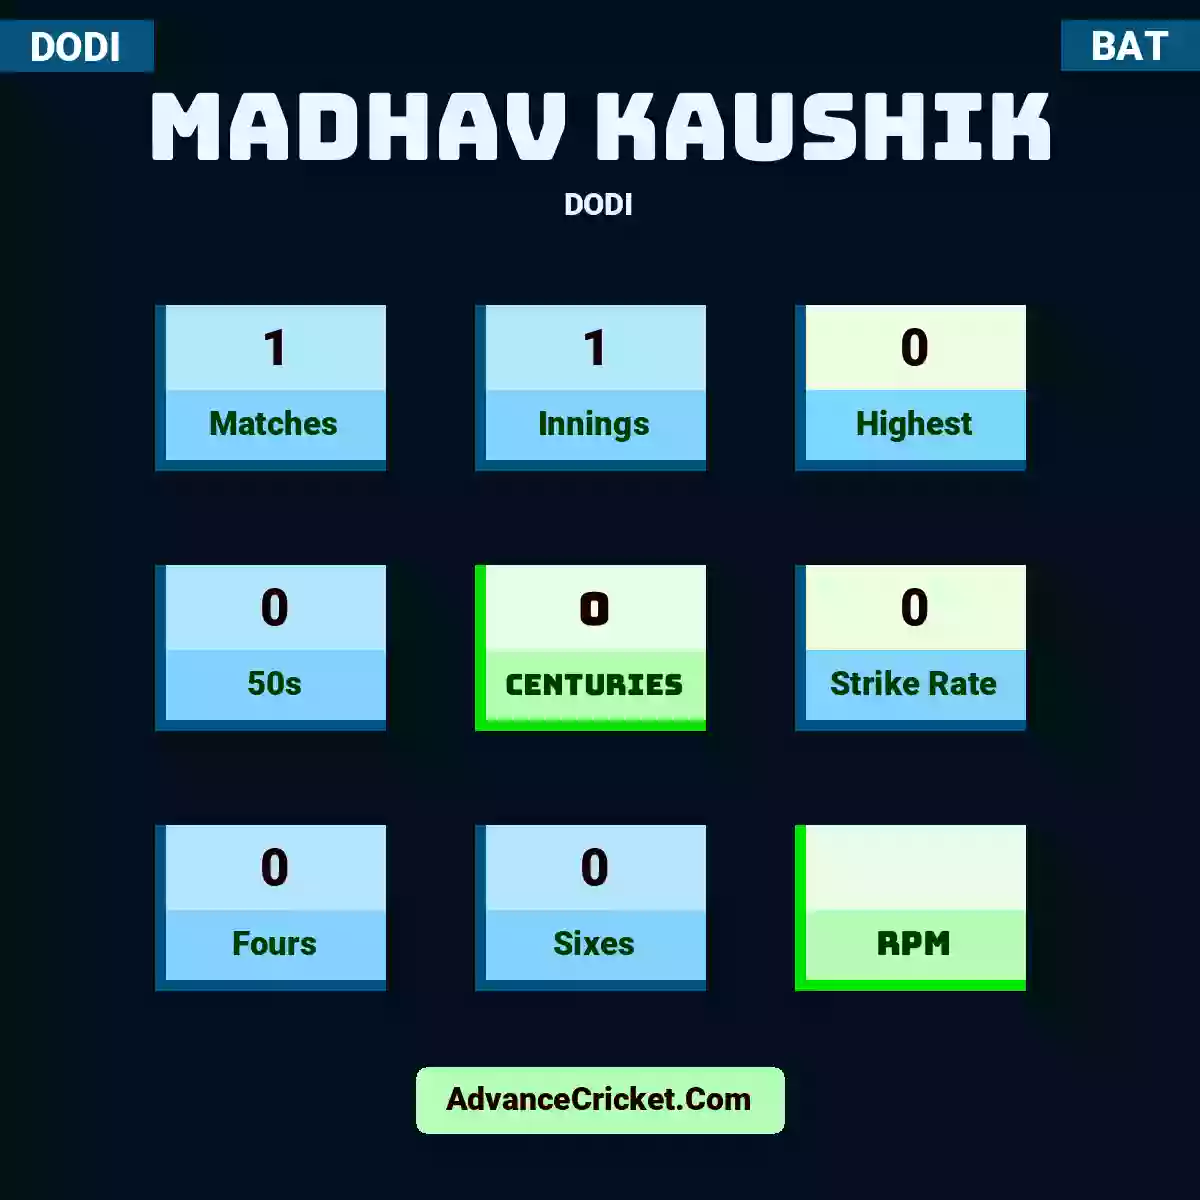 Madhav Kaushik DODI , Madhav Kaushik played 1 matches, scored 0 runs as highest, 0 half-centuries, and 0 centuries, with a strike rate of 0. M.Kaushik hit 0 fours and 0 sixes.